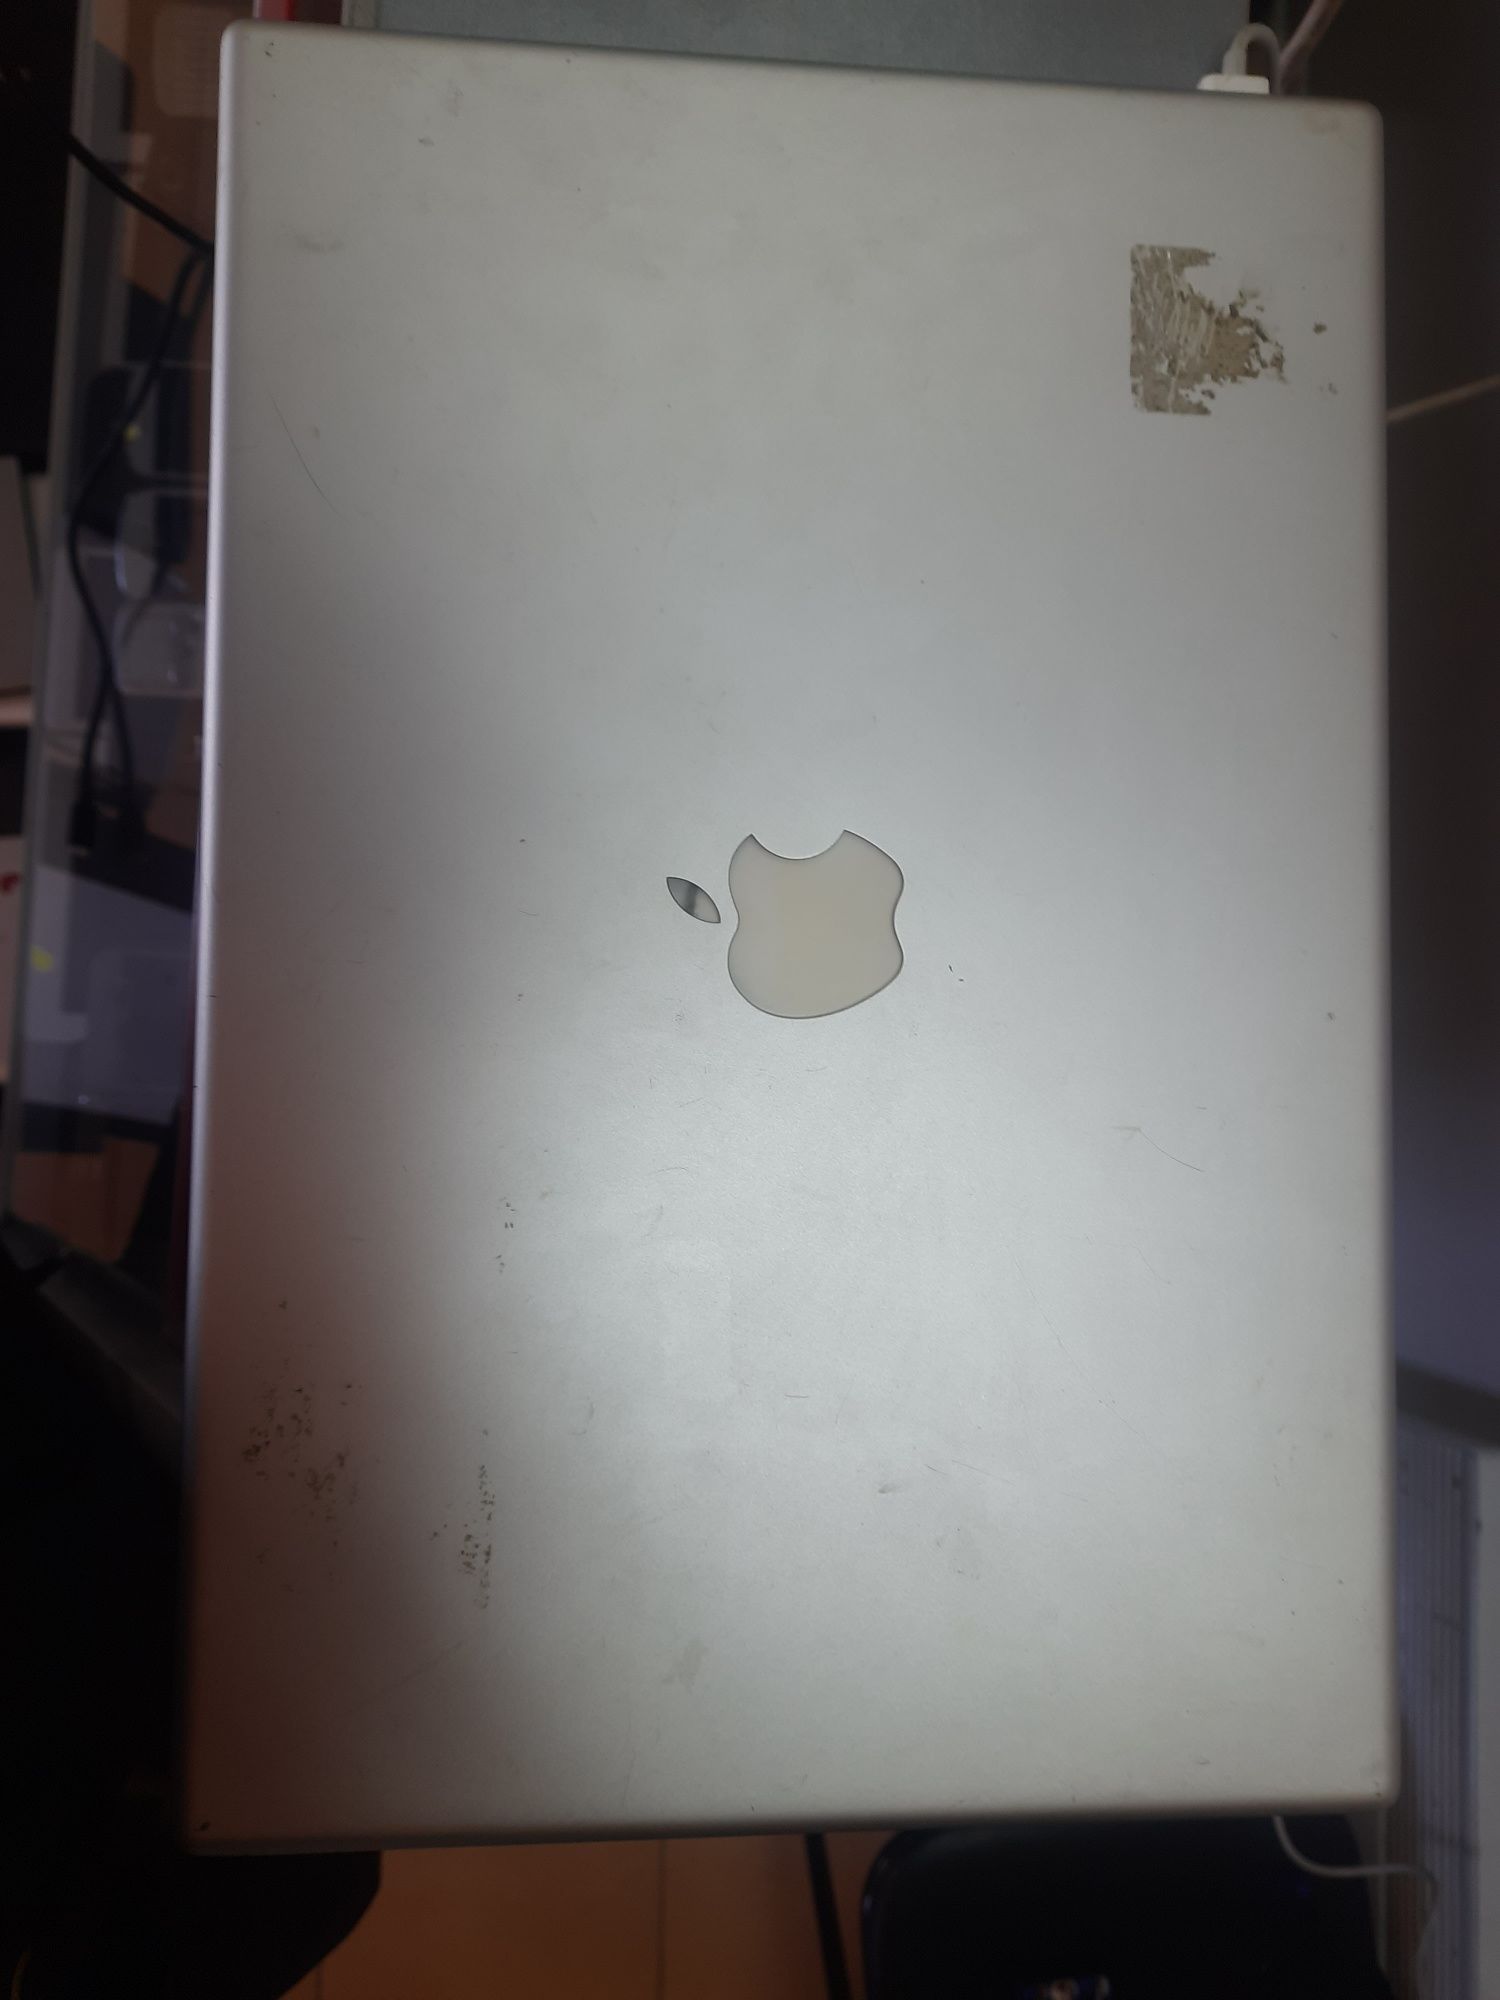 MacBook pro a1150 2006р